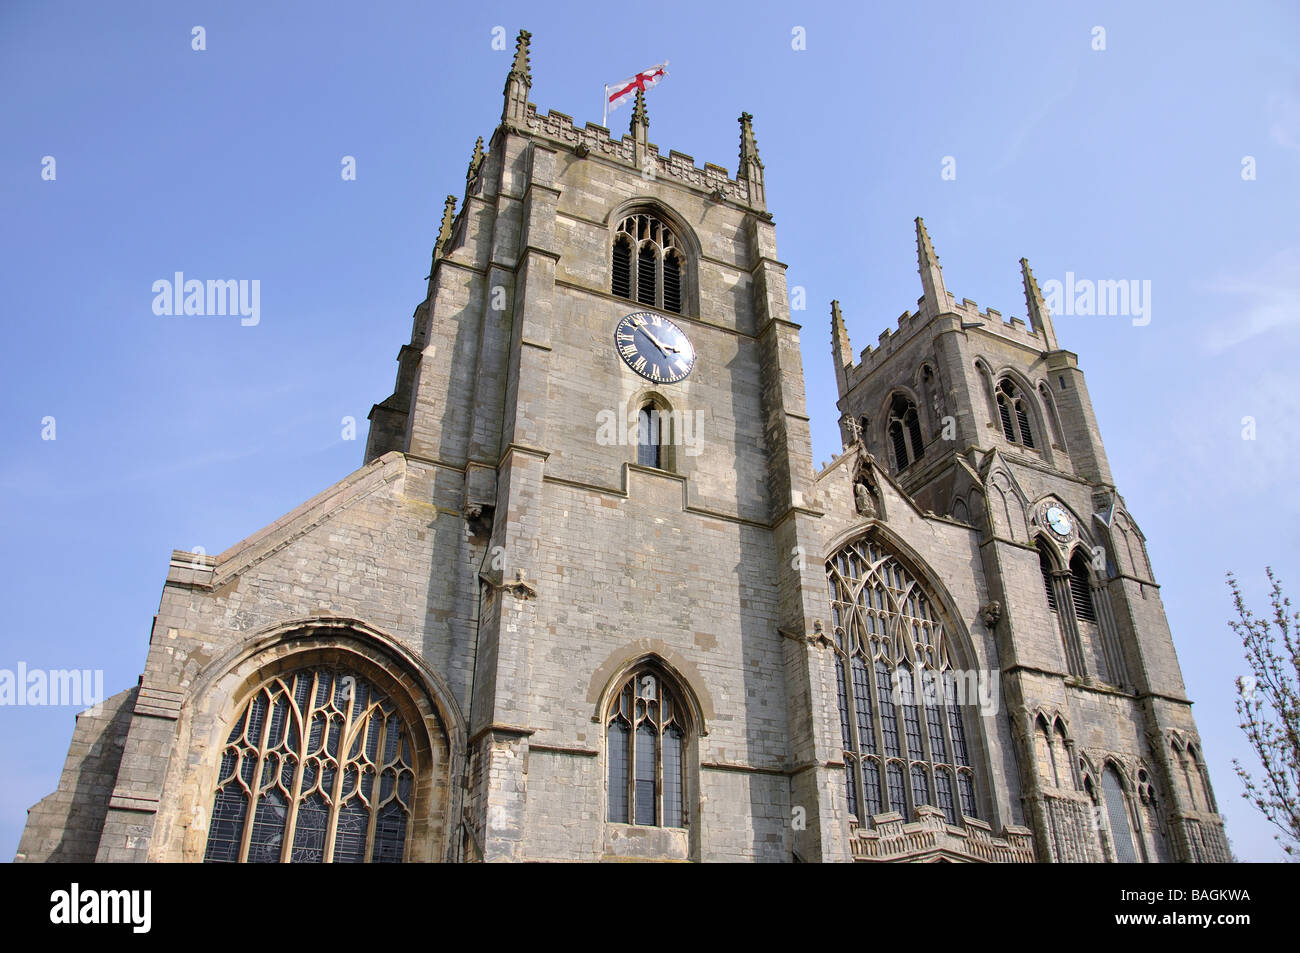 St Margaret's Church, marché le samedi Place, King's Lynn, Norfolk, Angleterre, Royaume-Uni Banque D'Images